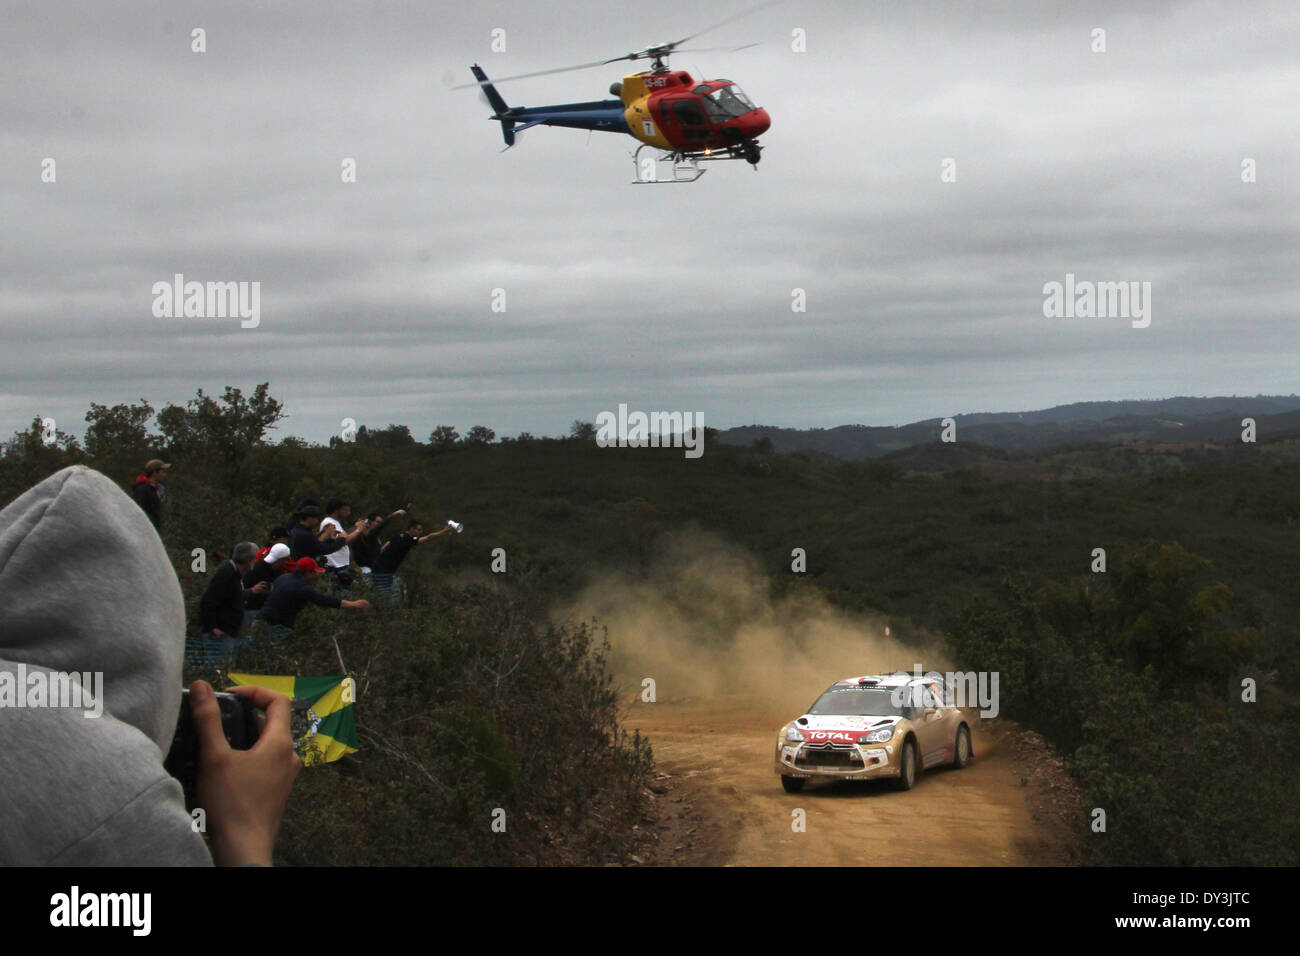 Algarve, Portugal. 5. April 2014. 2014 WRC Rallye Portugal, in den Bergen oberhalb der Algarve an der südlichen Küste Portugals statt. Mads Ostebrg (NOR) und Jonas Andersson (SWE) - Citroen DS3 WRC Credit: Action Plus Sport/Alamy Live News Stockfoto